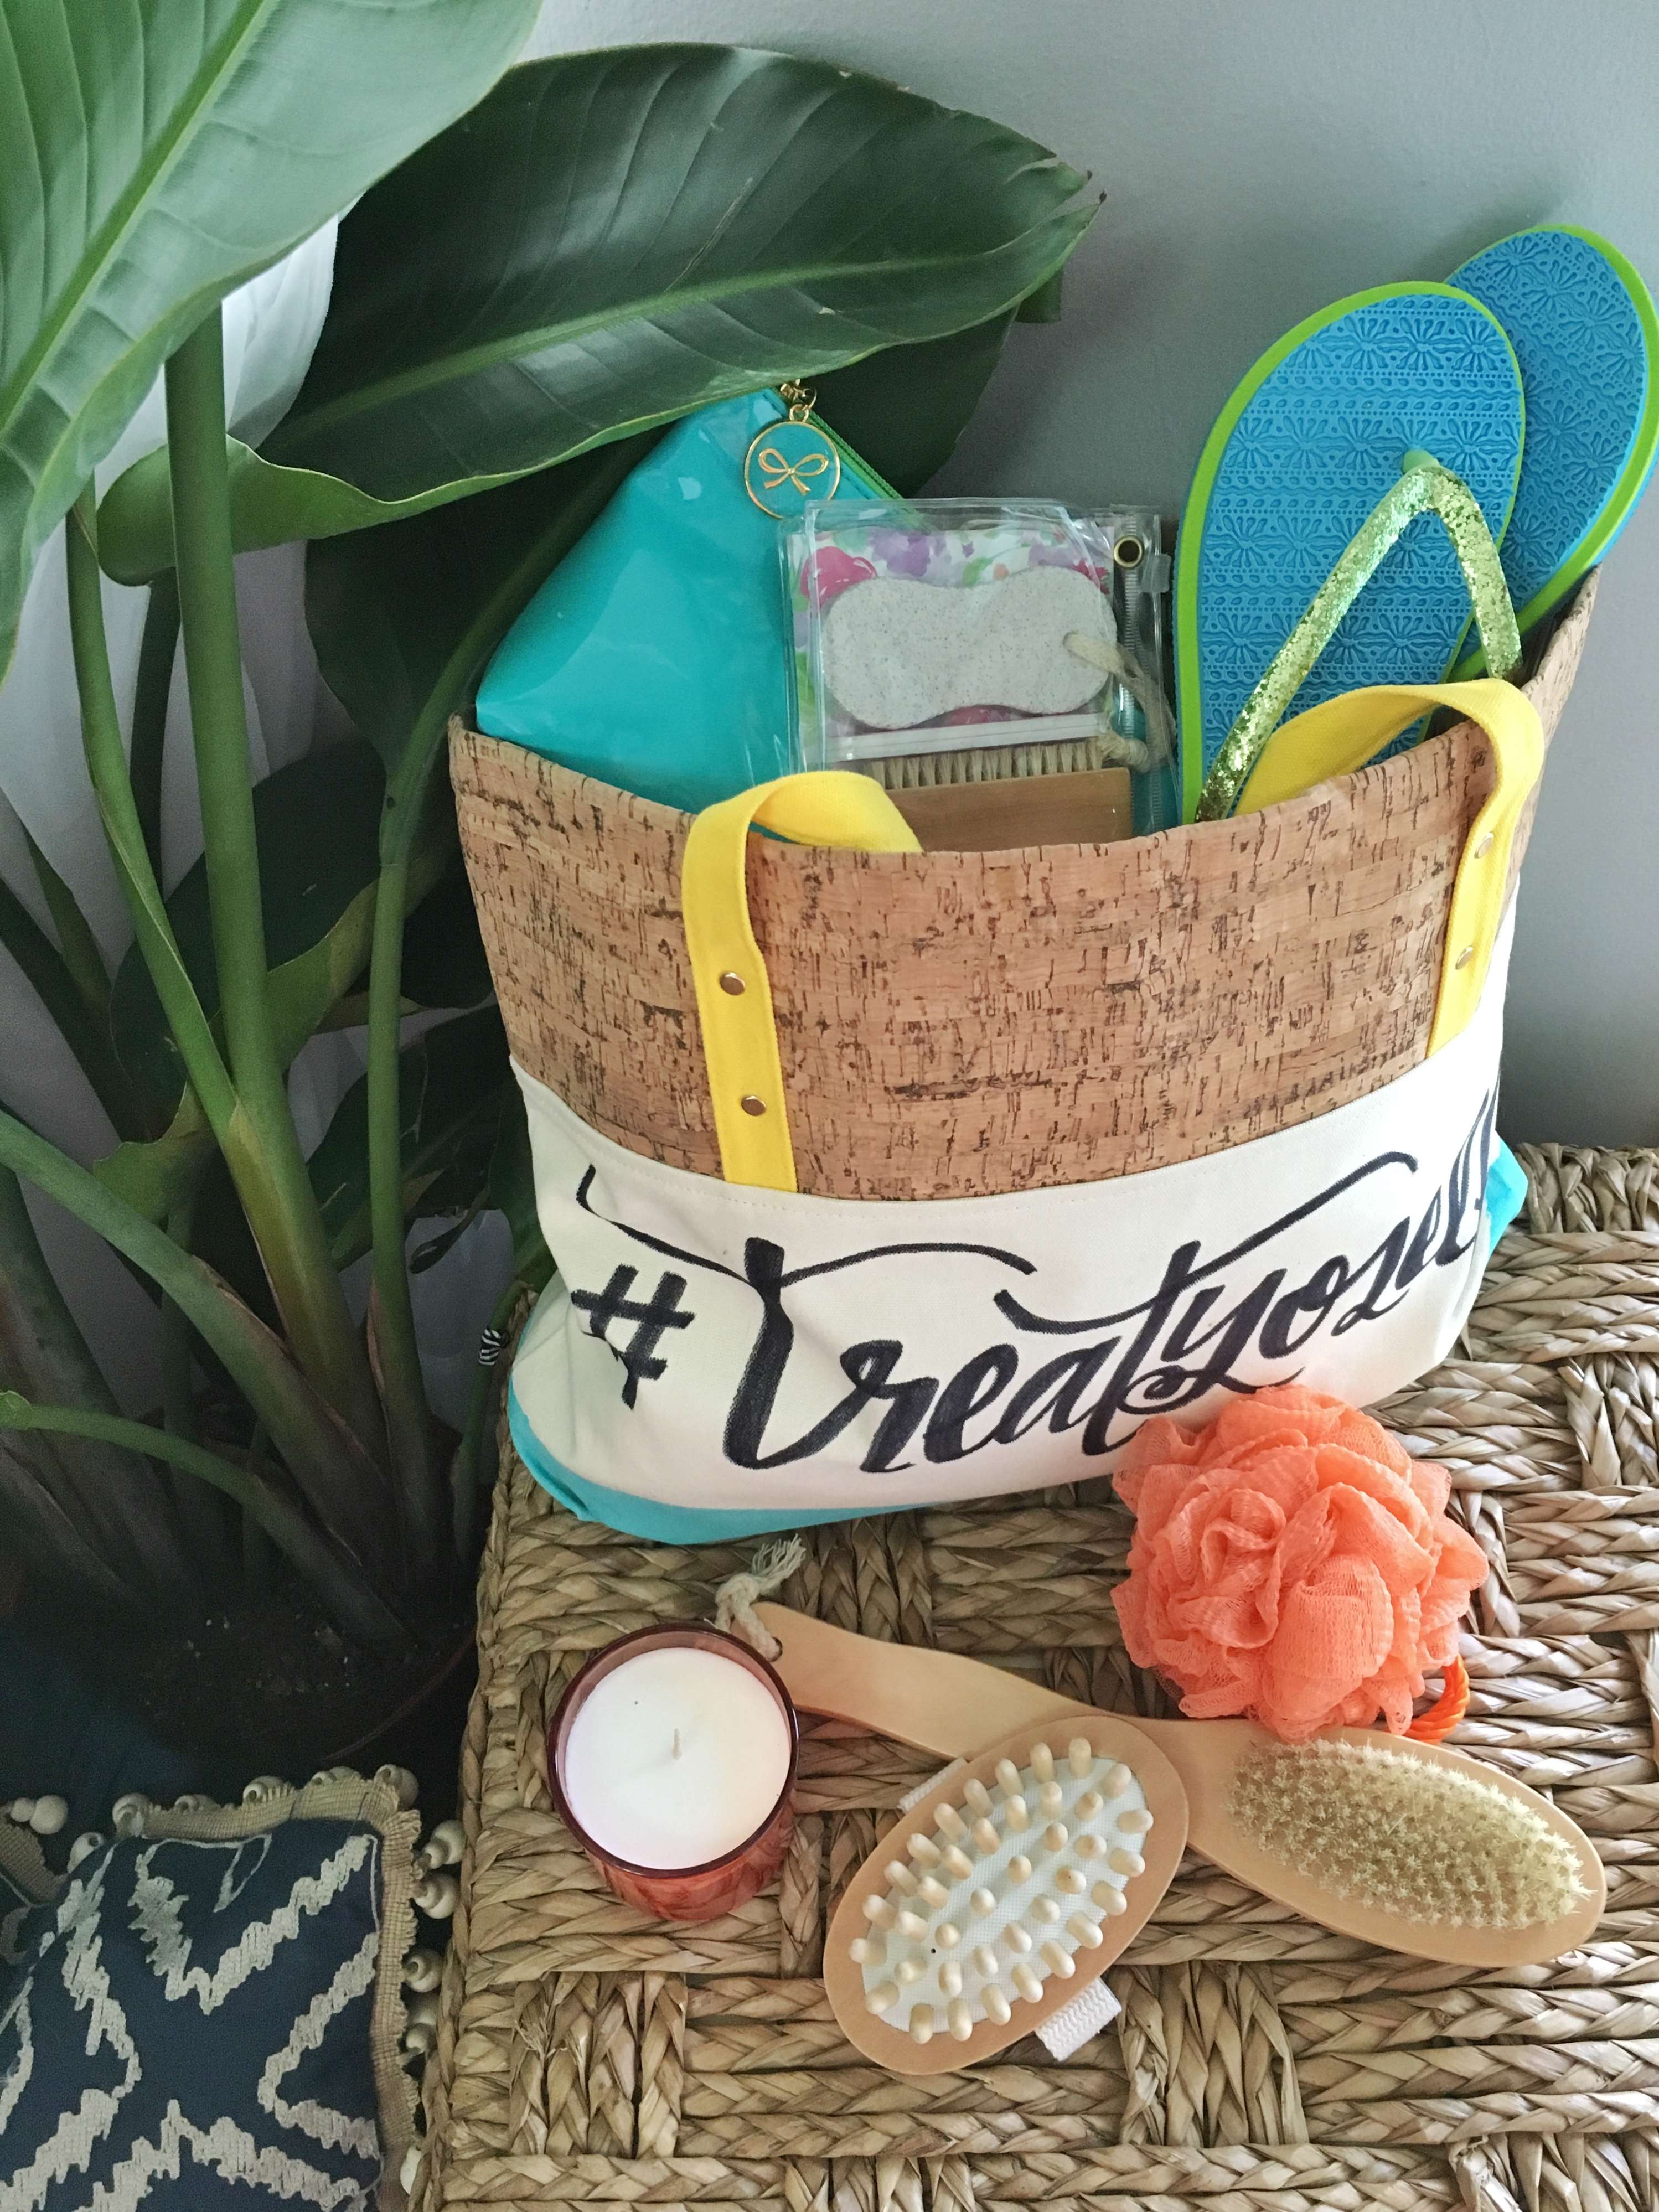 Treat Yoself Tote Bag Gift Basket DIY